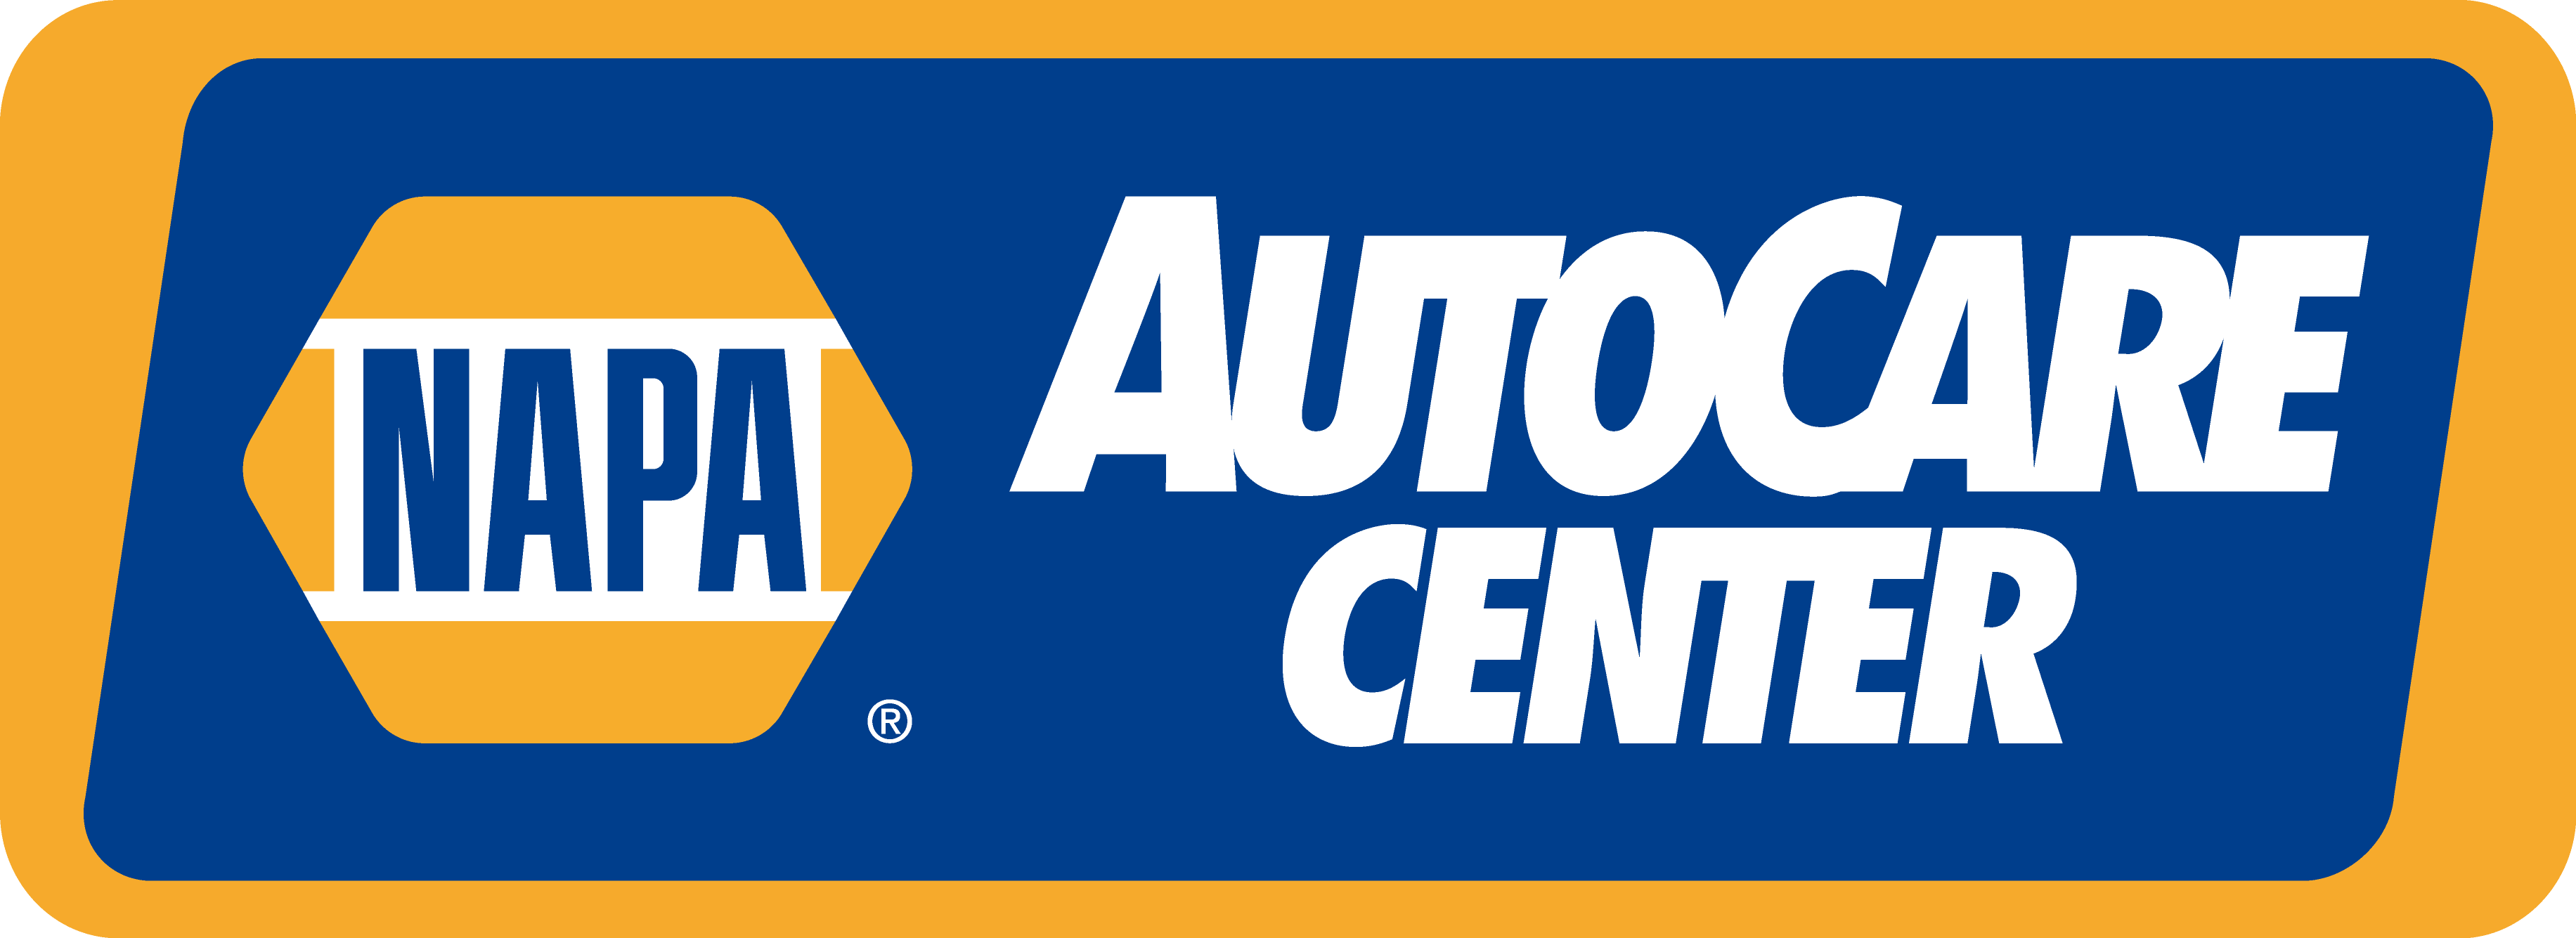 NAPA Auto Care Center, Fenton Auto Repair, Fenton, MO, 63026